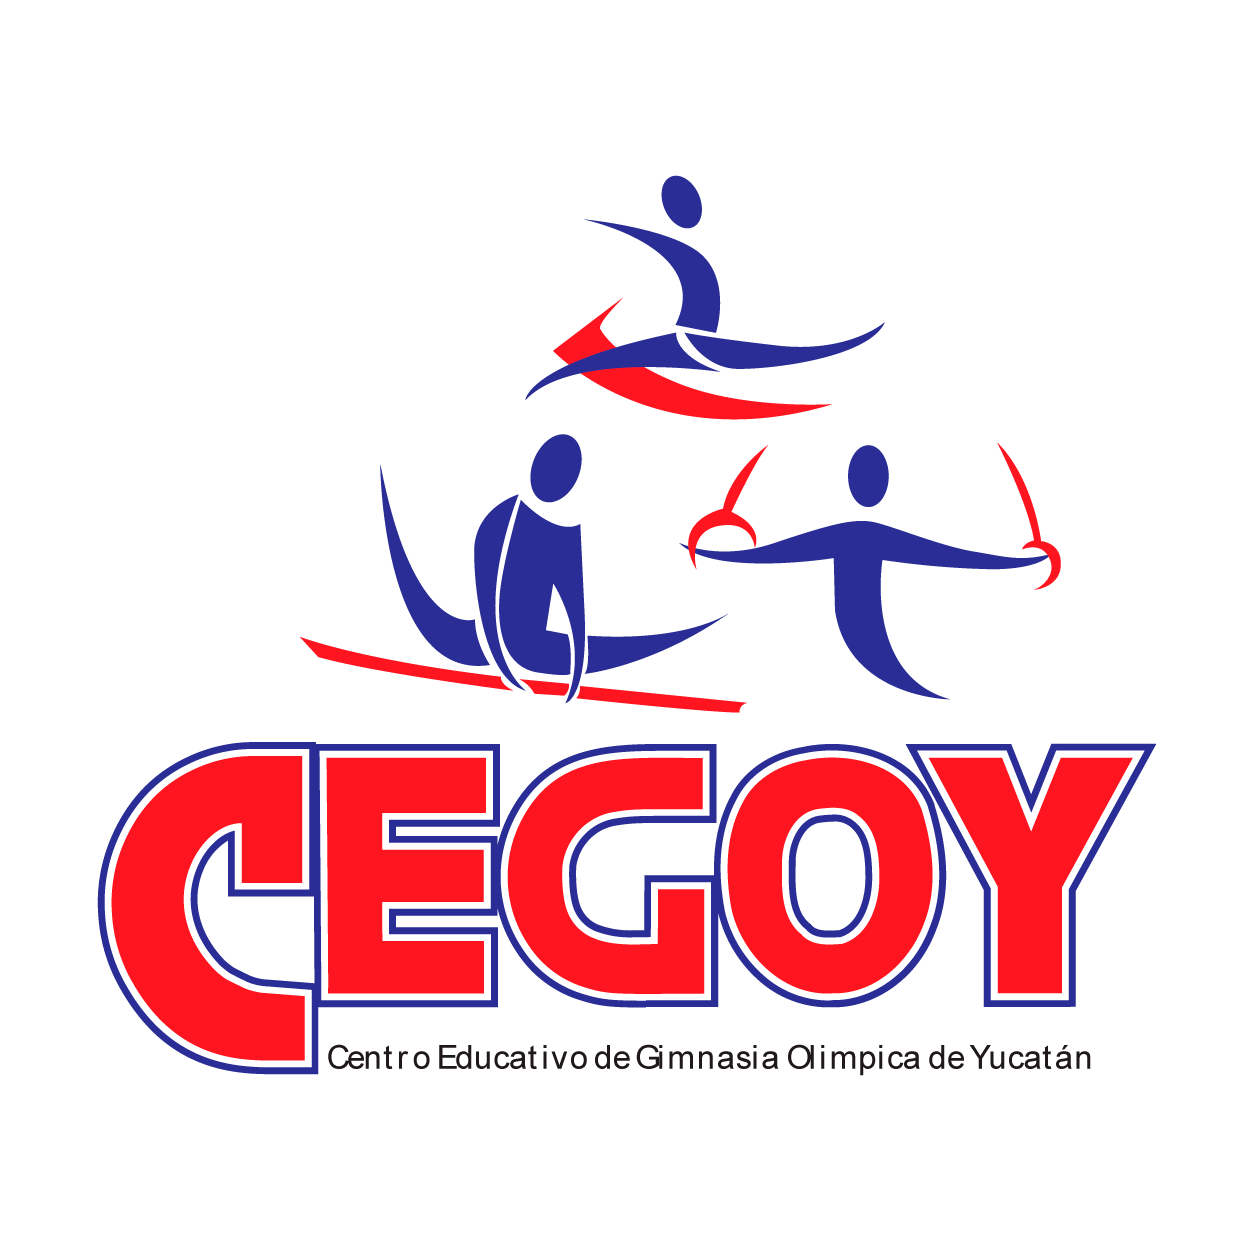 Cegoy